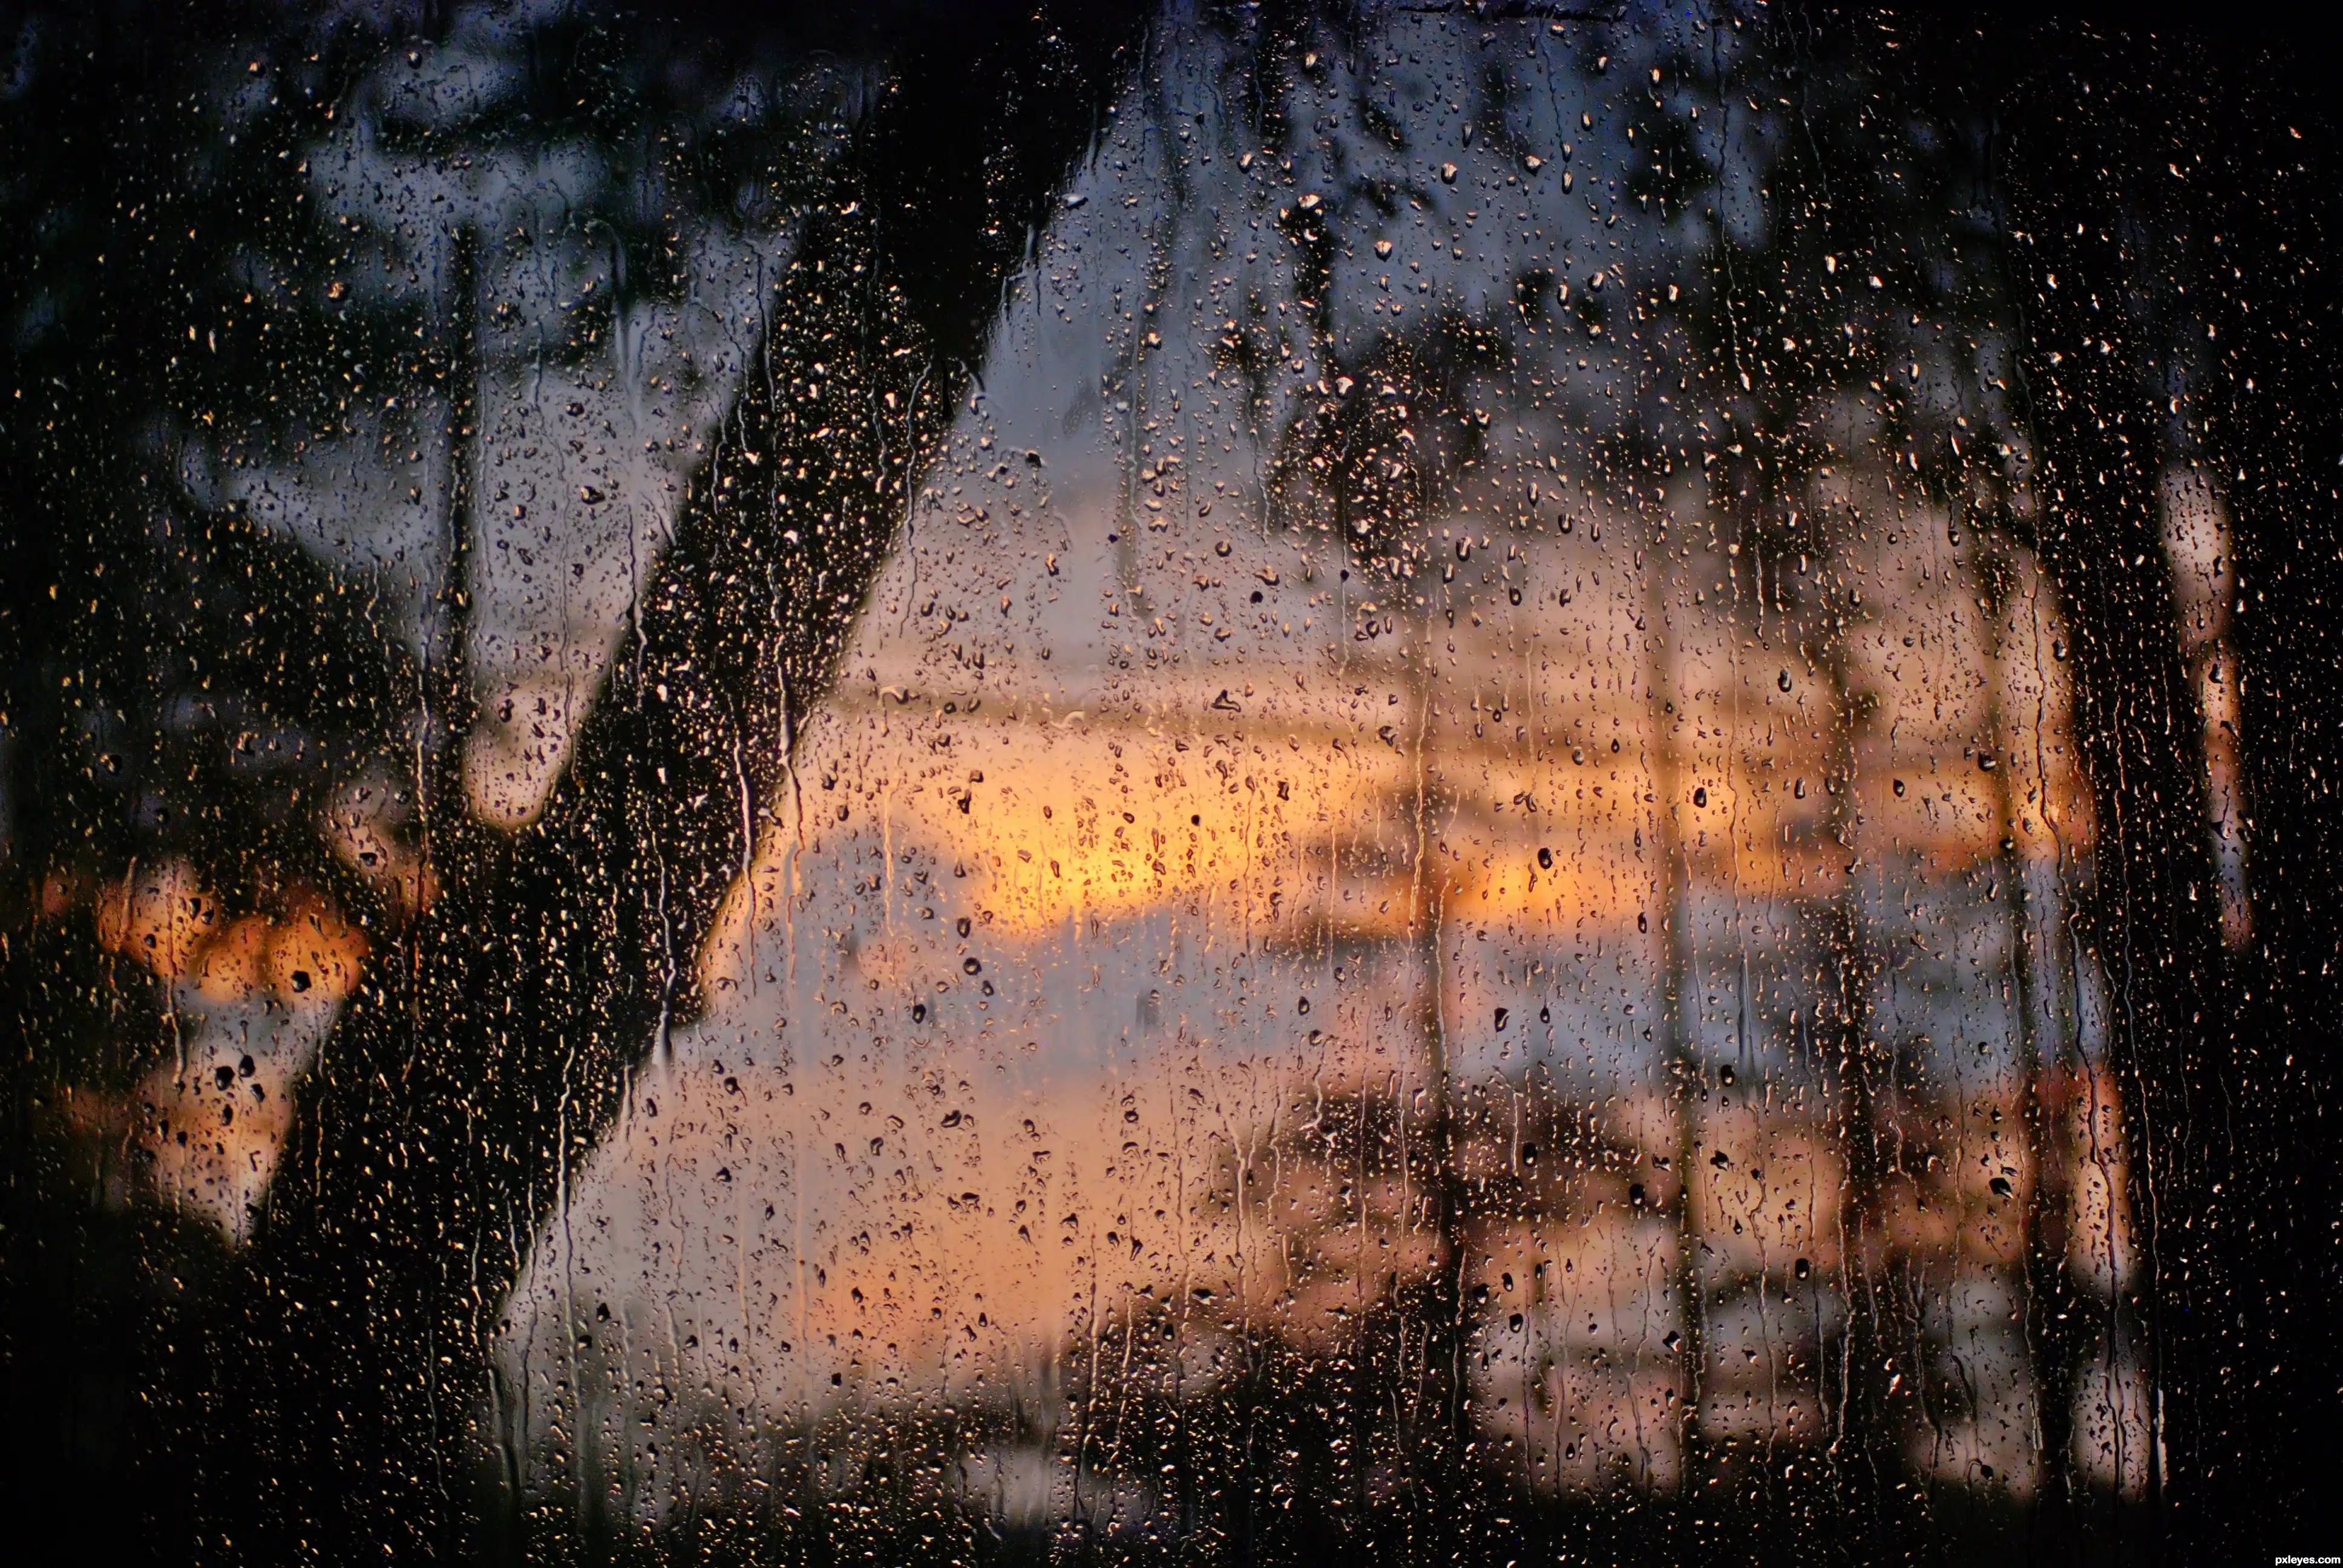 Lluvia vespertina en ventana